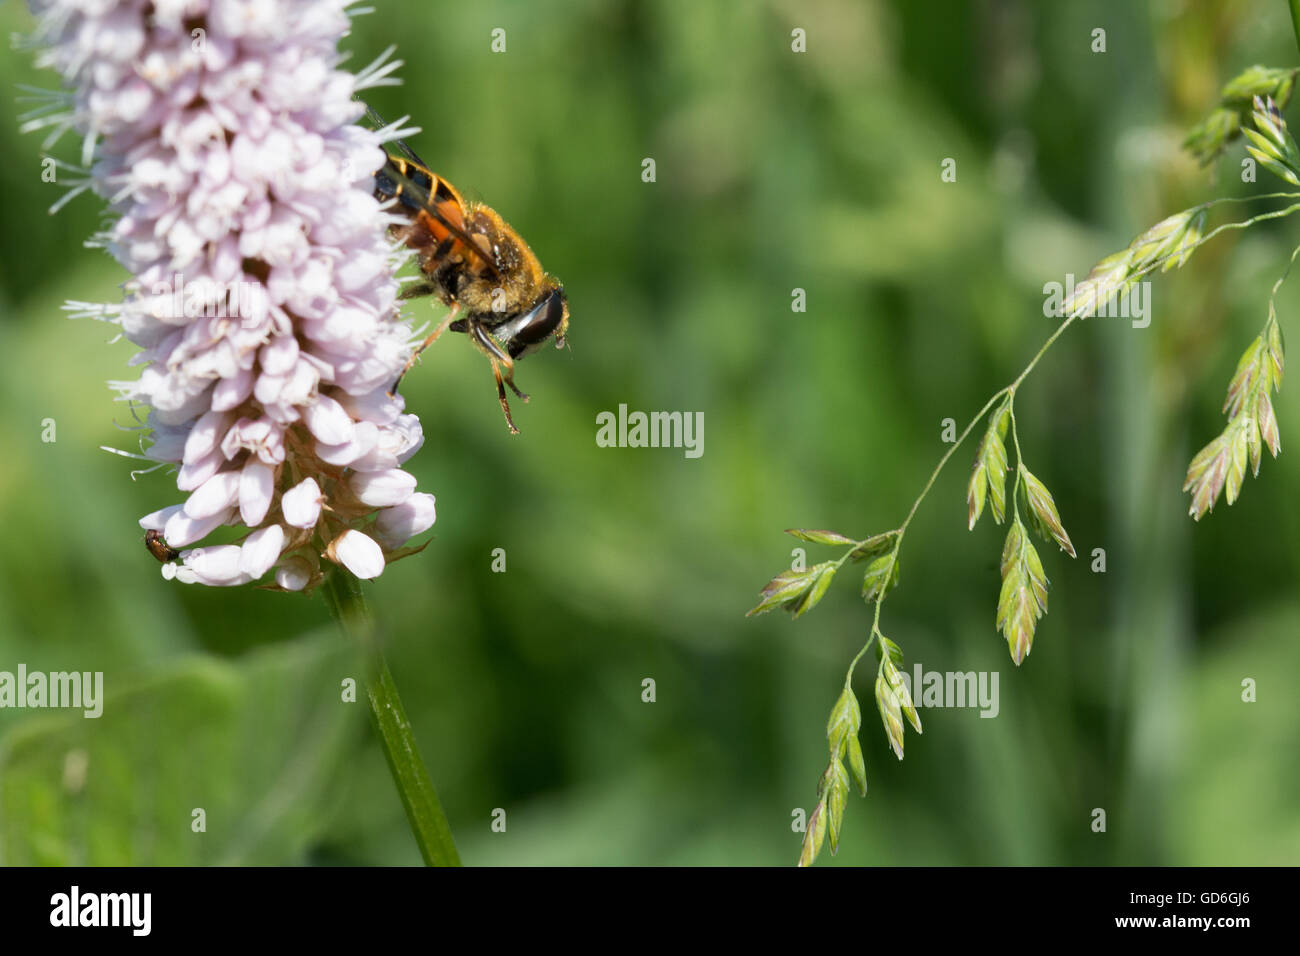 Biene an einer Pflanze putzt sich  Bee on a plant dressing up Stock Photo